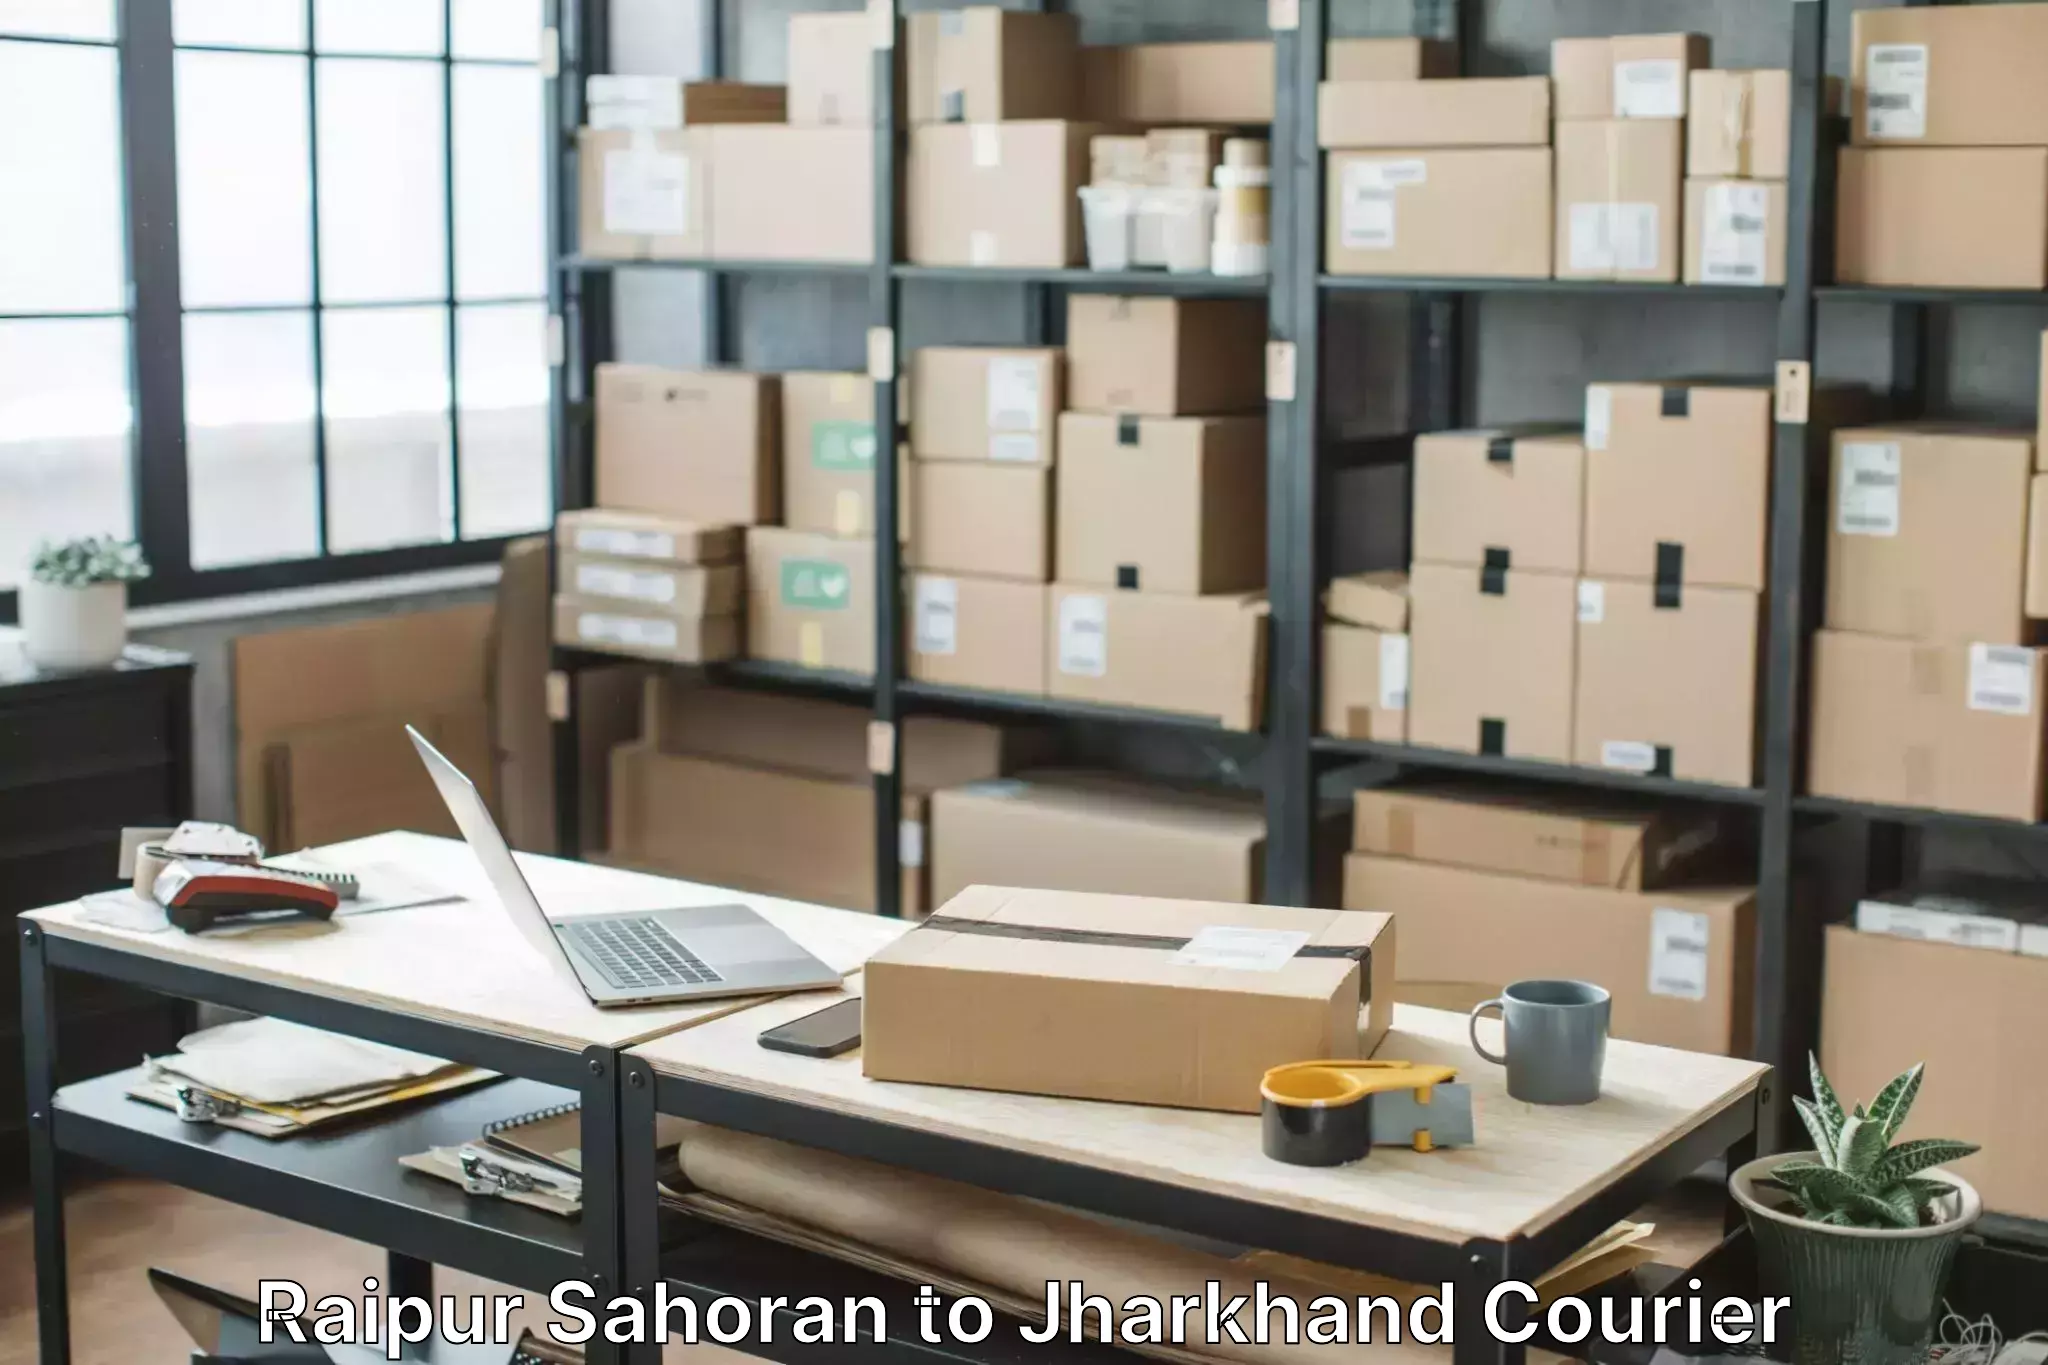 Trusted moving company Raipur Sahoran to IIT Dhanbad